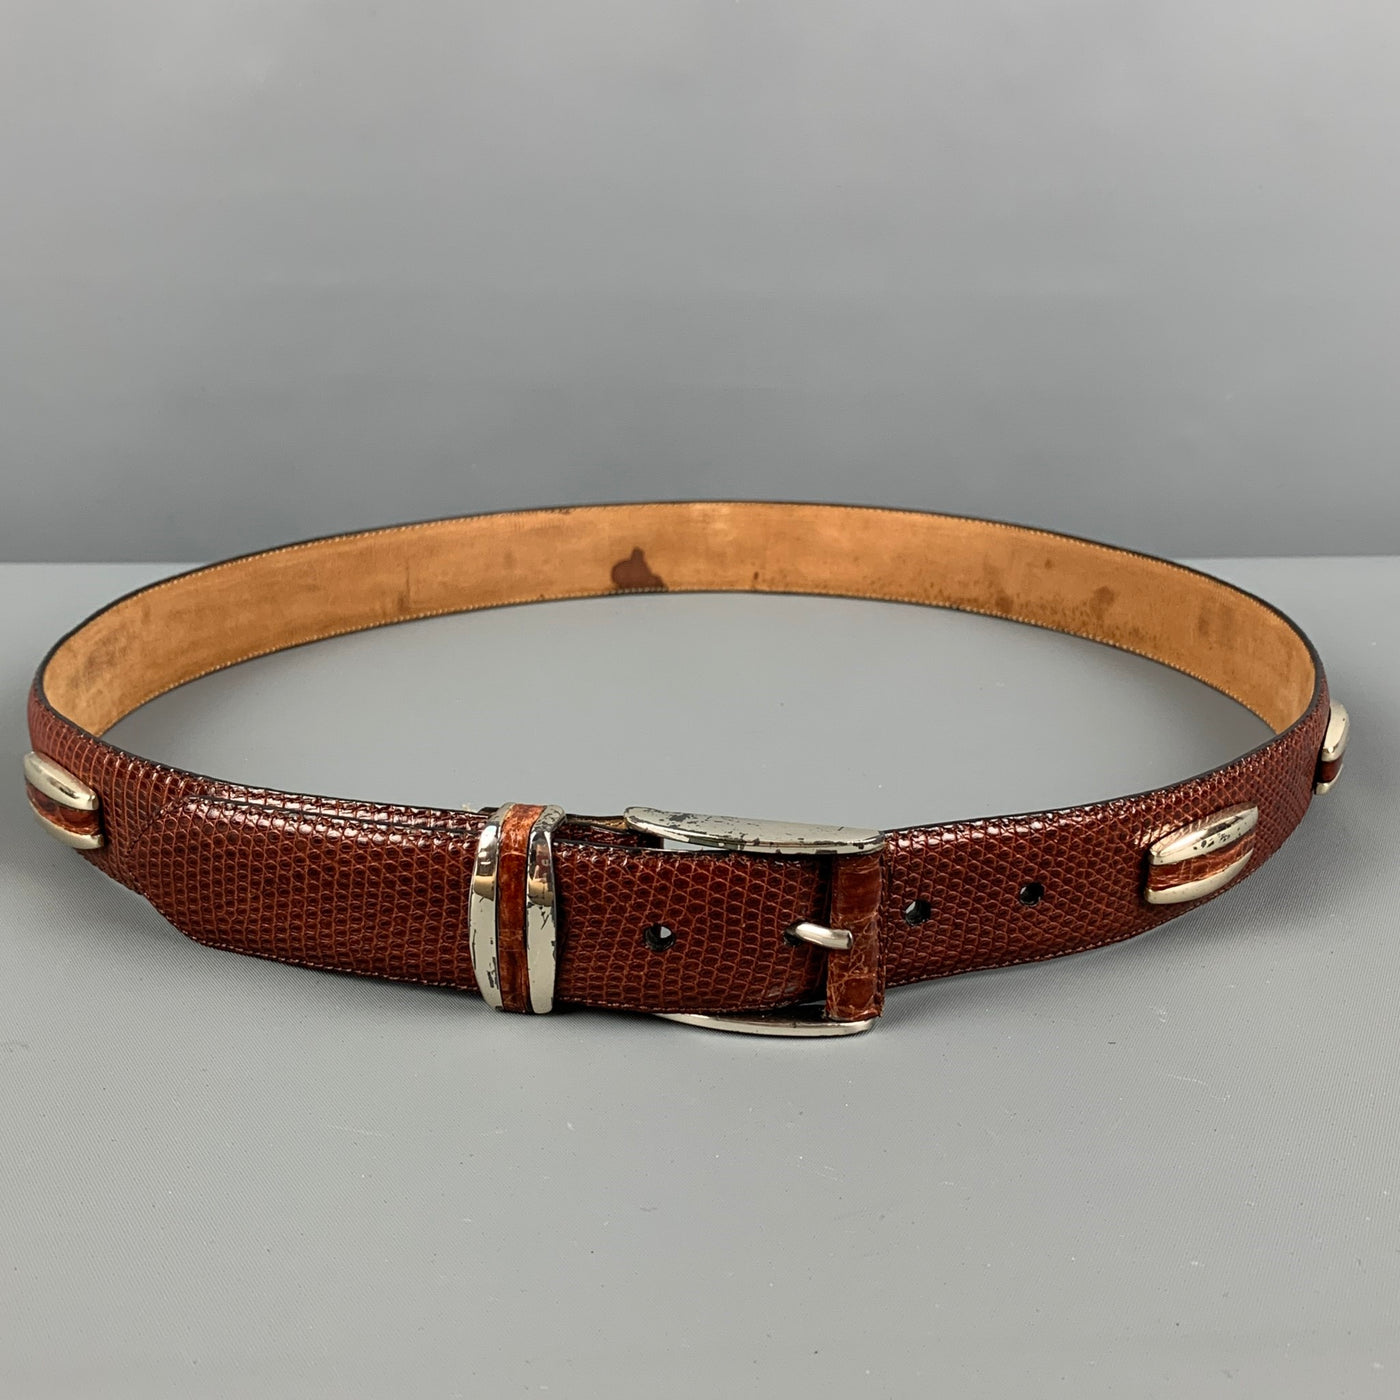 Mezlan genuine brown crocodile leather belt